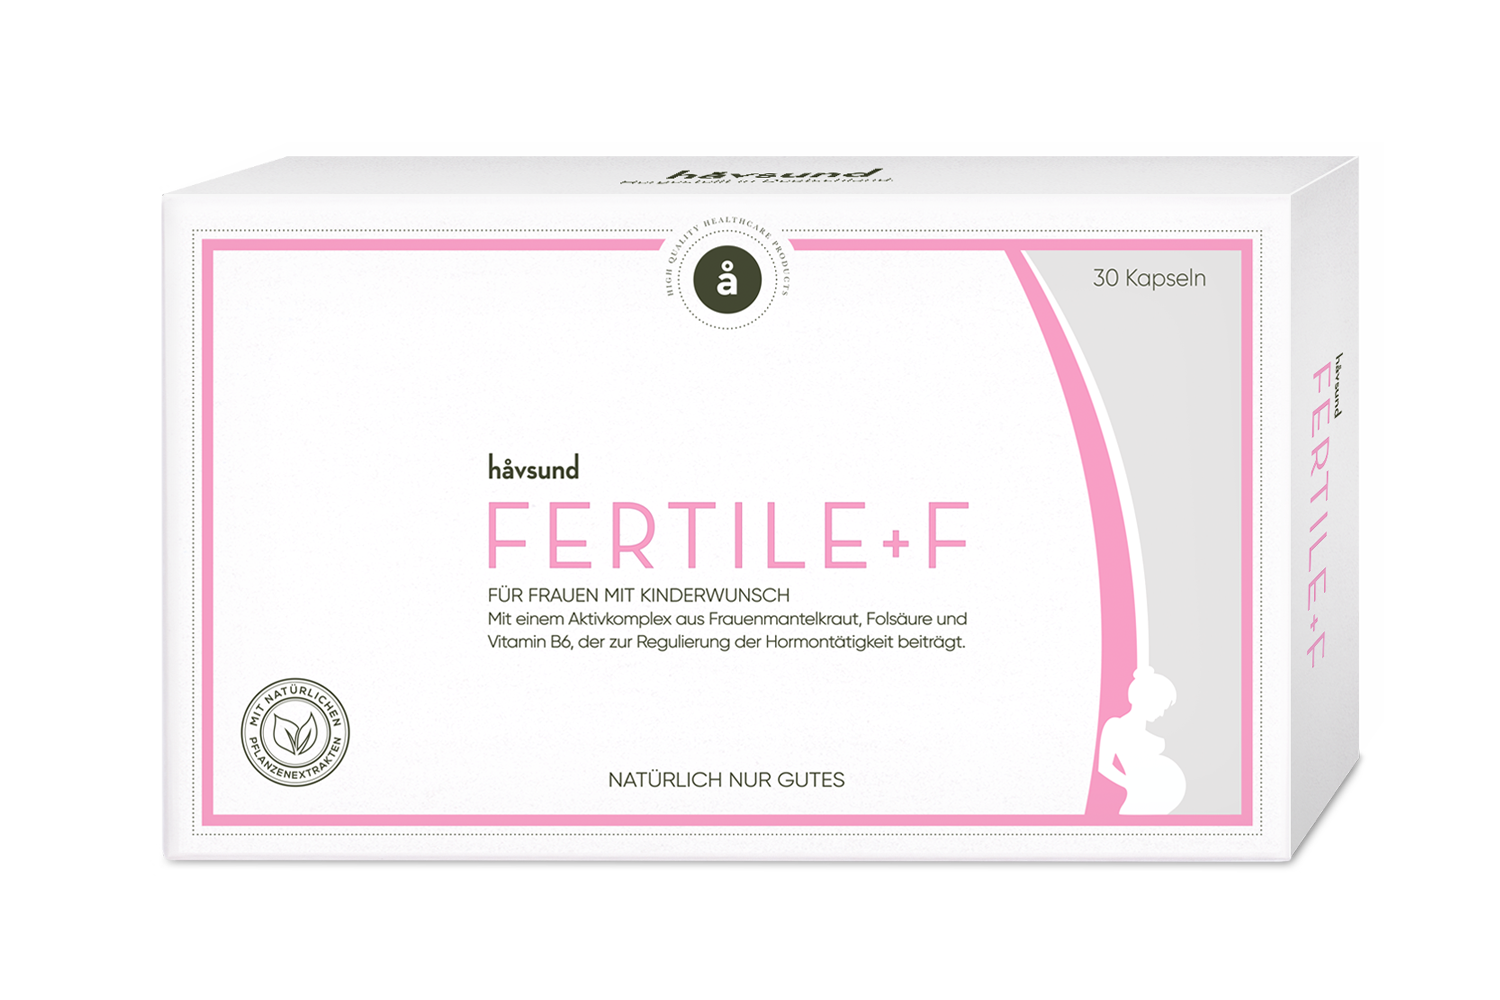 håvsund Fertile+F product image